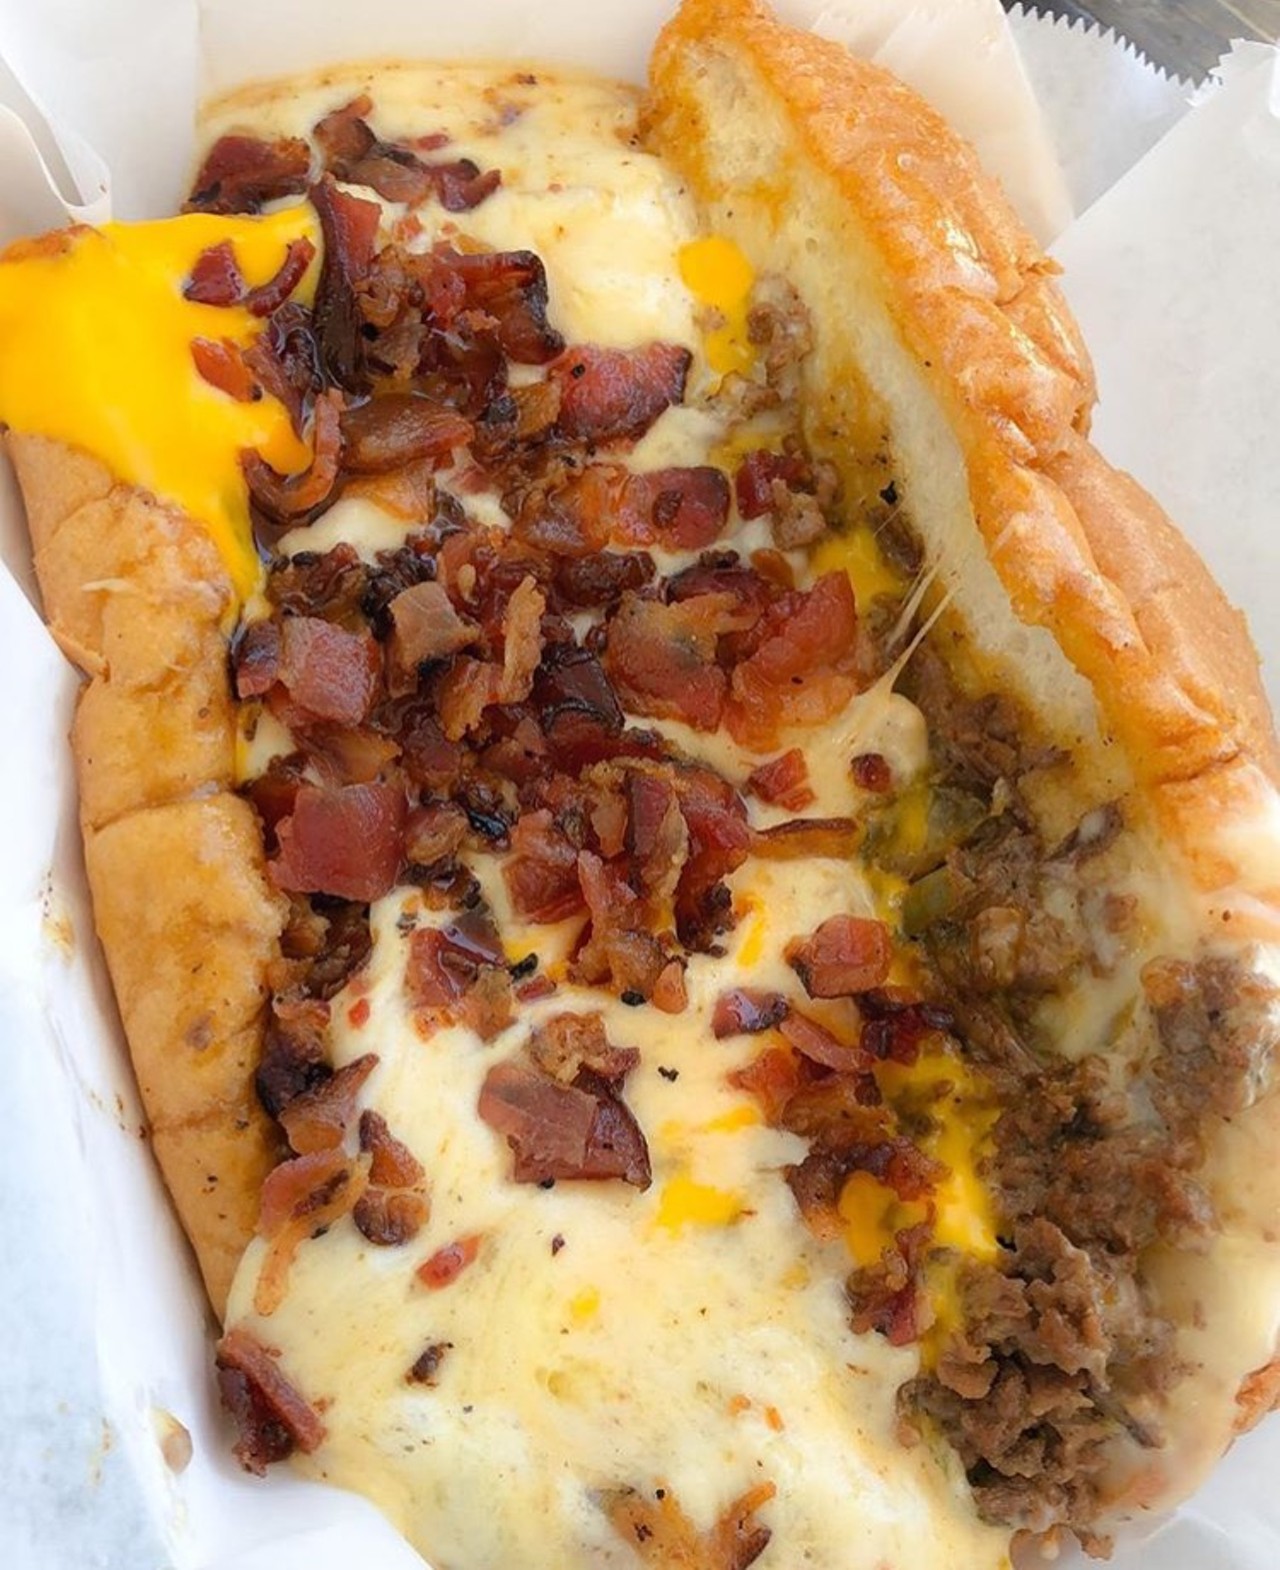 Best Food Truck
Philly's Phamous Cheesesteaks, 2301 San Pedro Ave., (210) 621-8908, facebook.com/phillysphamousitalianice
Photo via Instagram / lilbrownie993